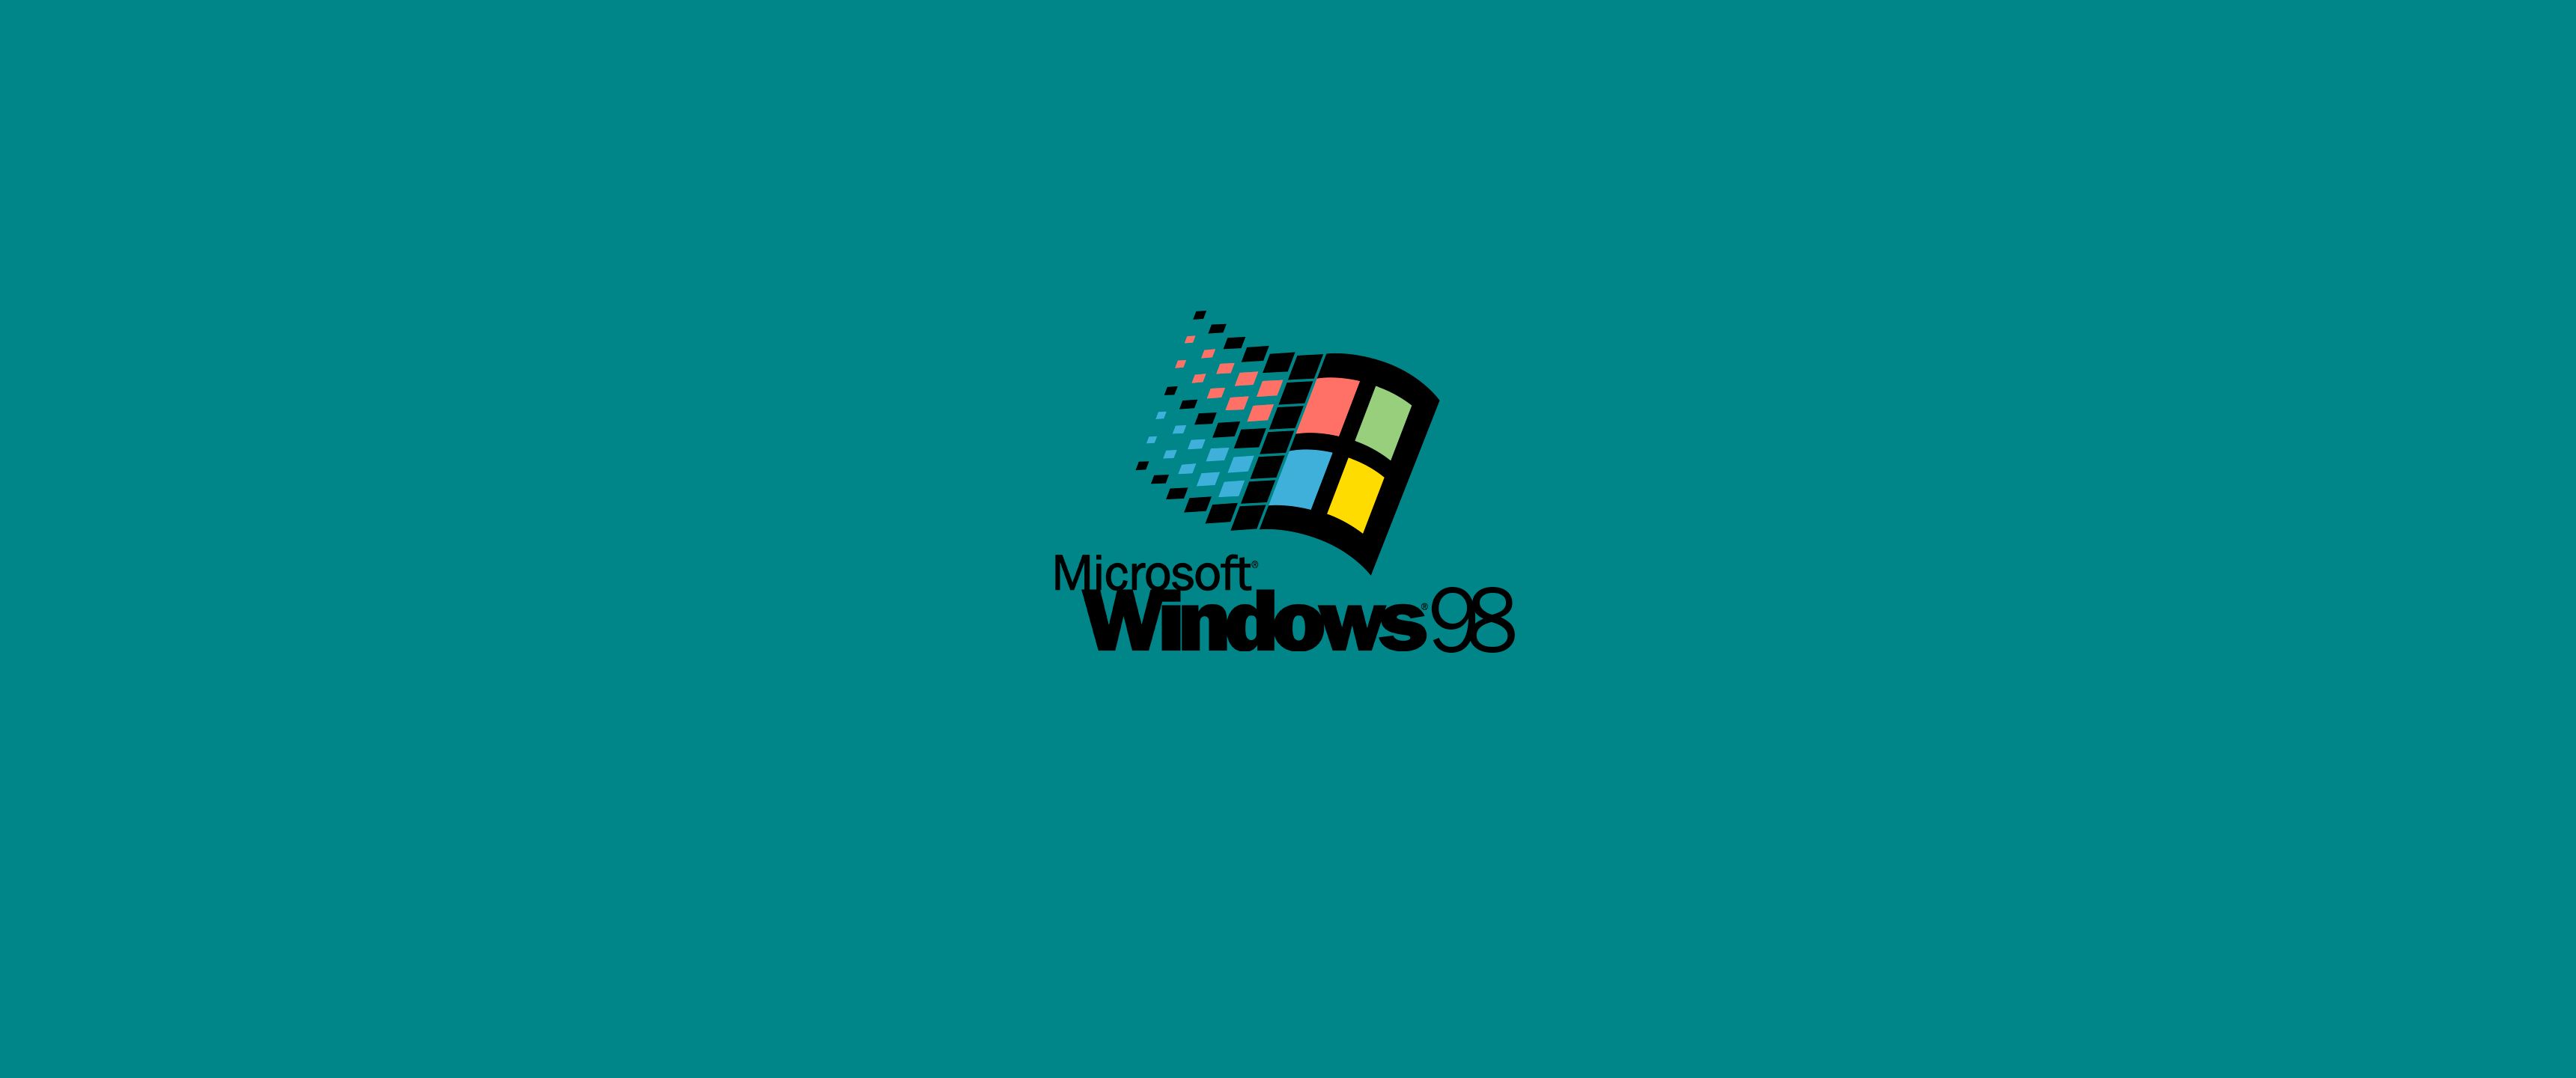 windows 98, windows, technology